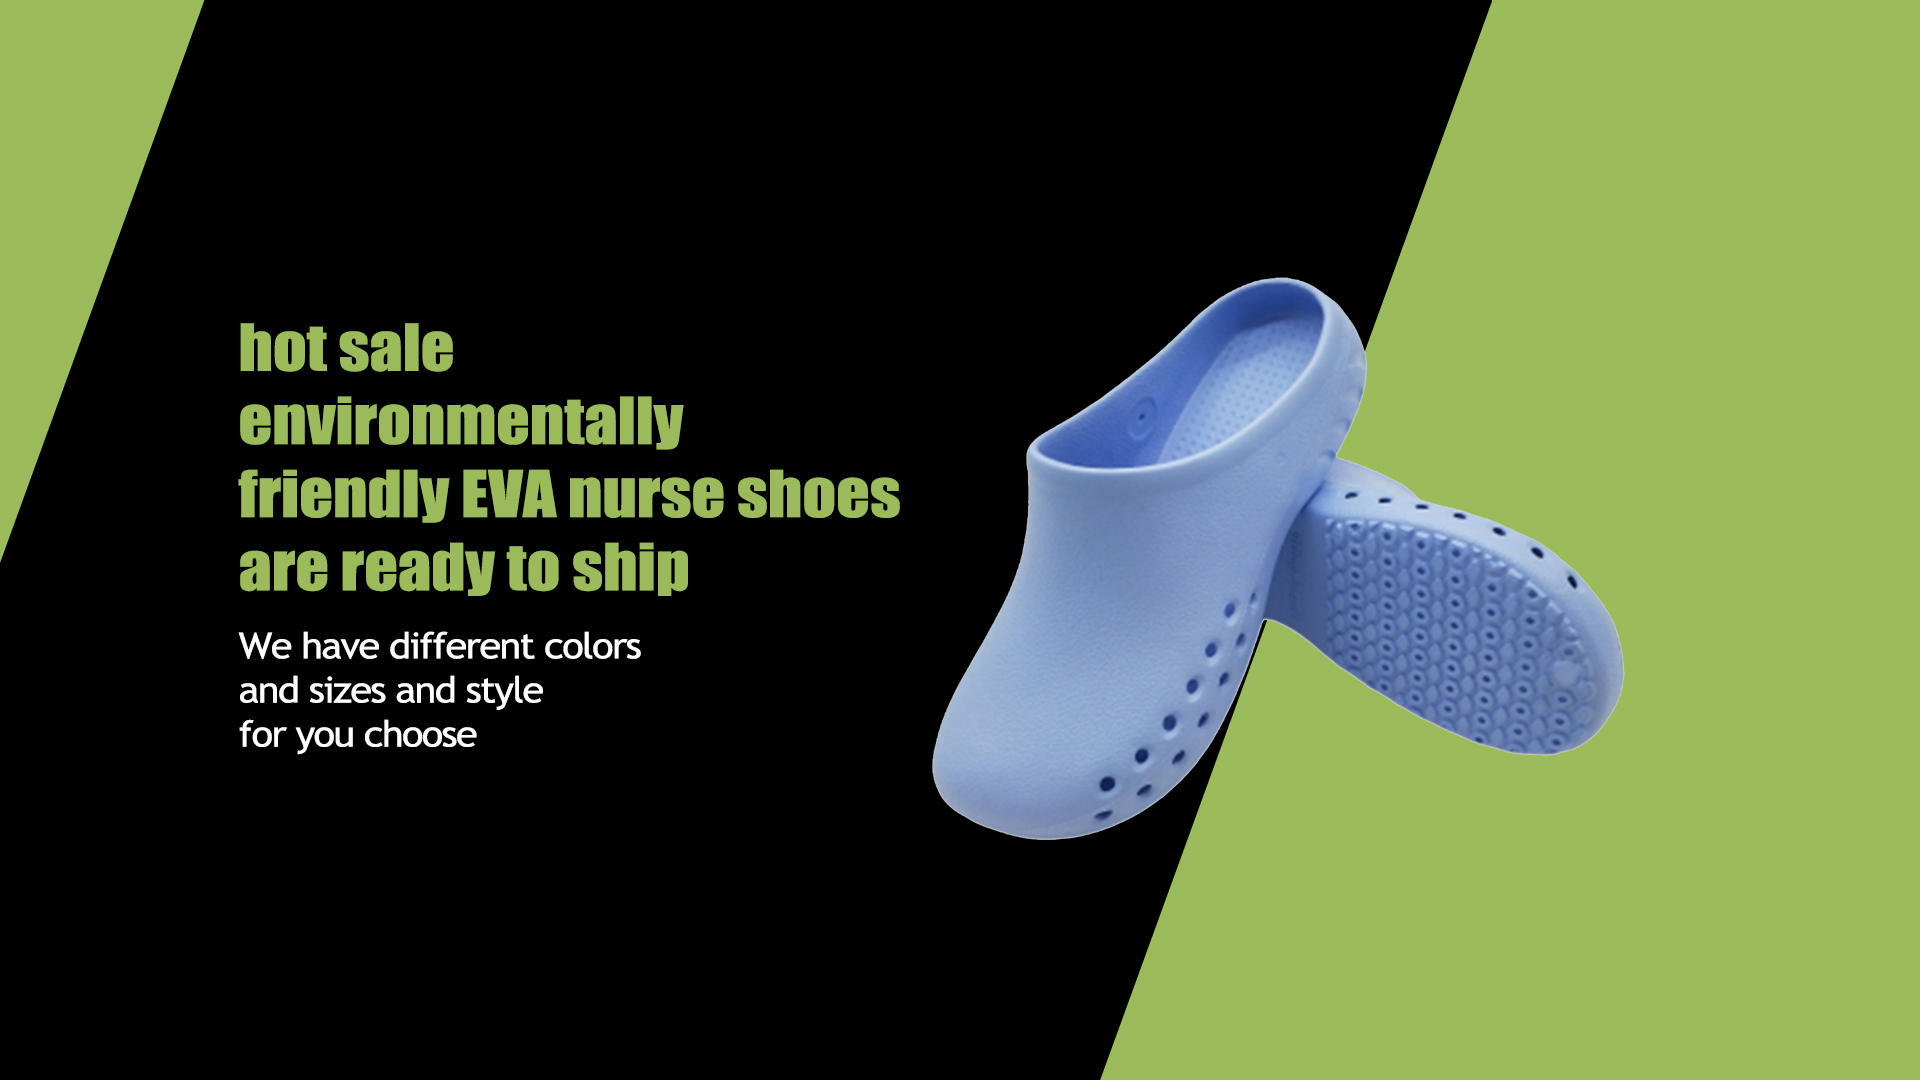 hot sale environmentally friendly EVA nurse shoes are ready to ship